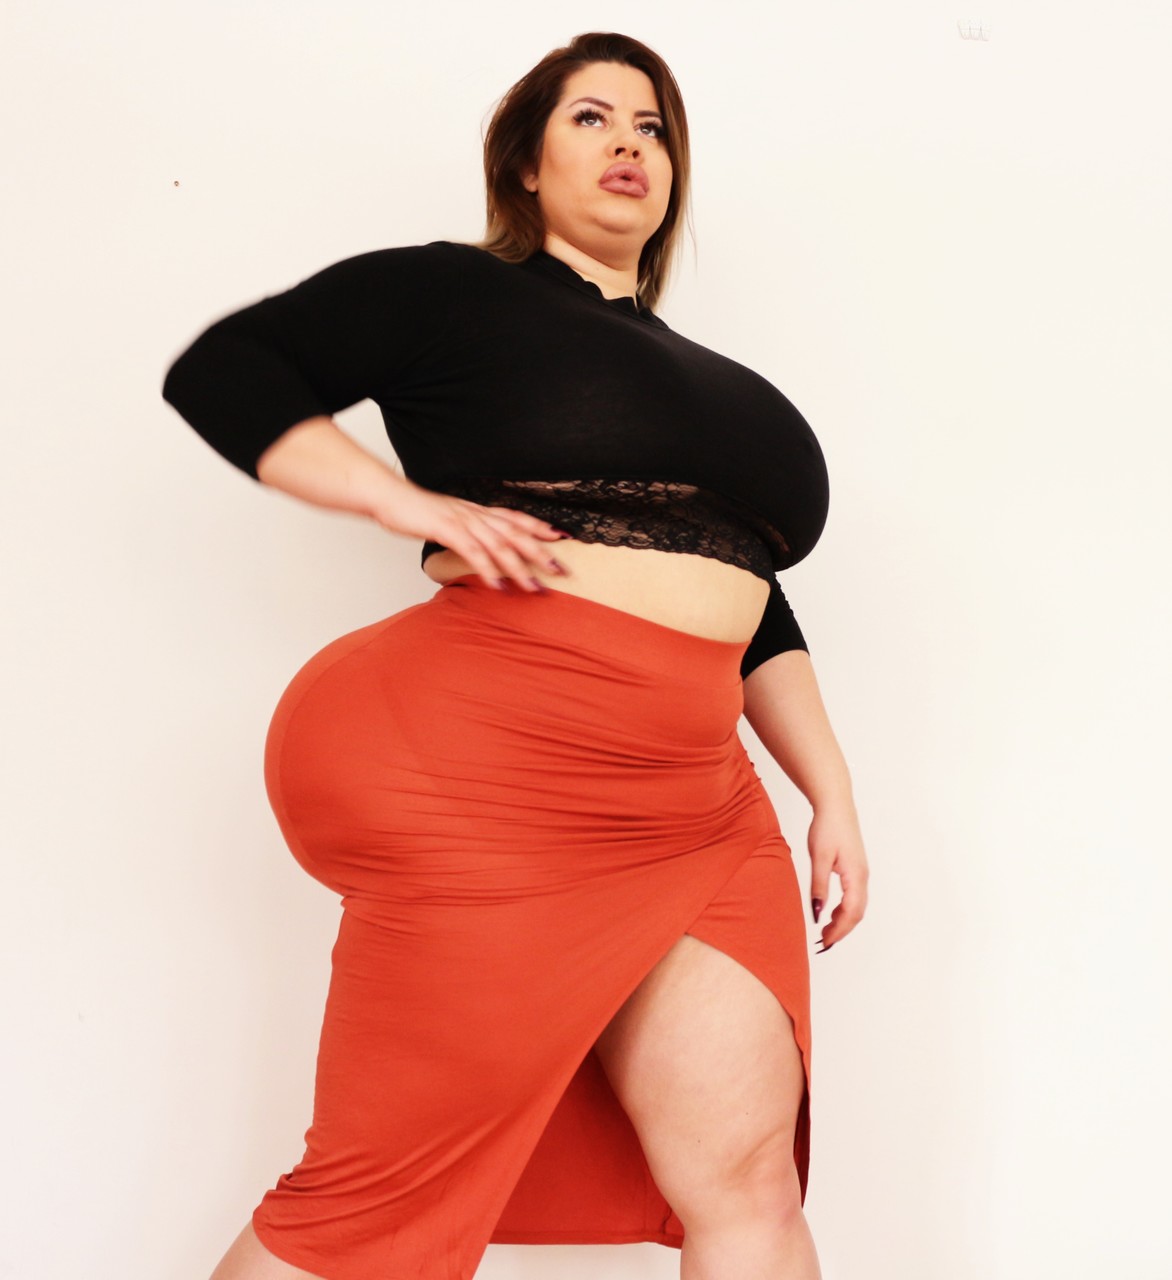 Stunning MILF fatty Natasha Crown flaunting her very big ass in a tight skirt foto porno #423816654 | Natasha Crown Pics, Natasha Crown, BBW, porno móvil